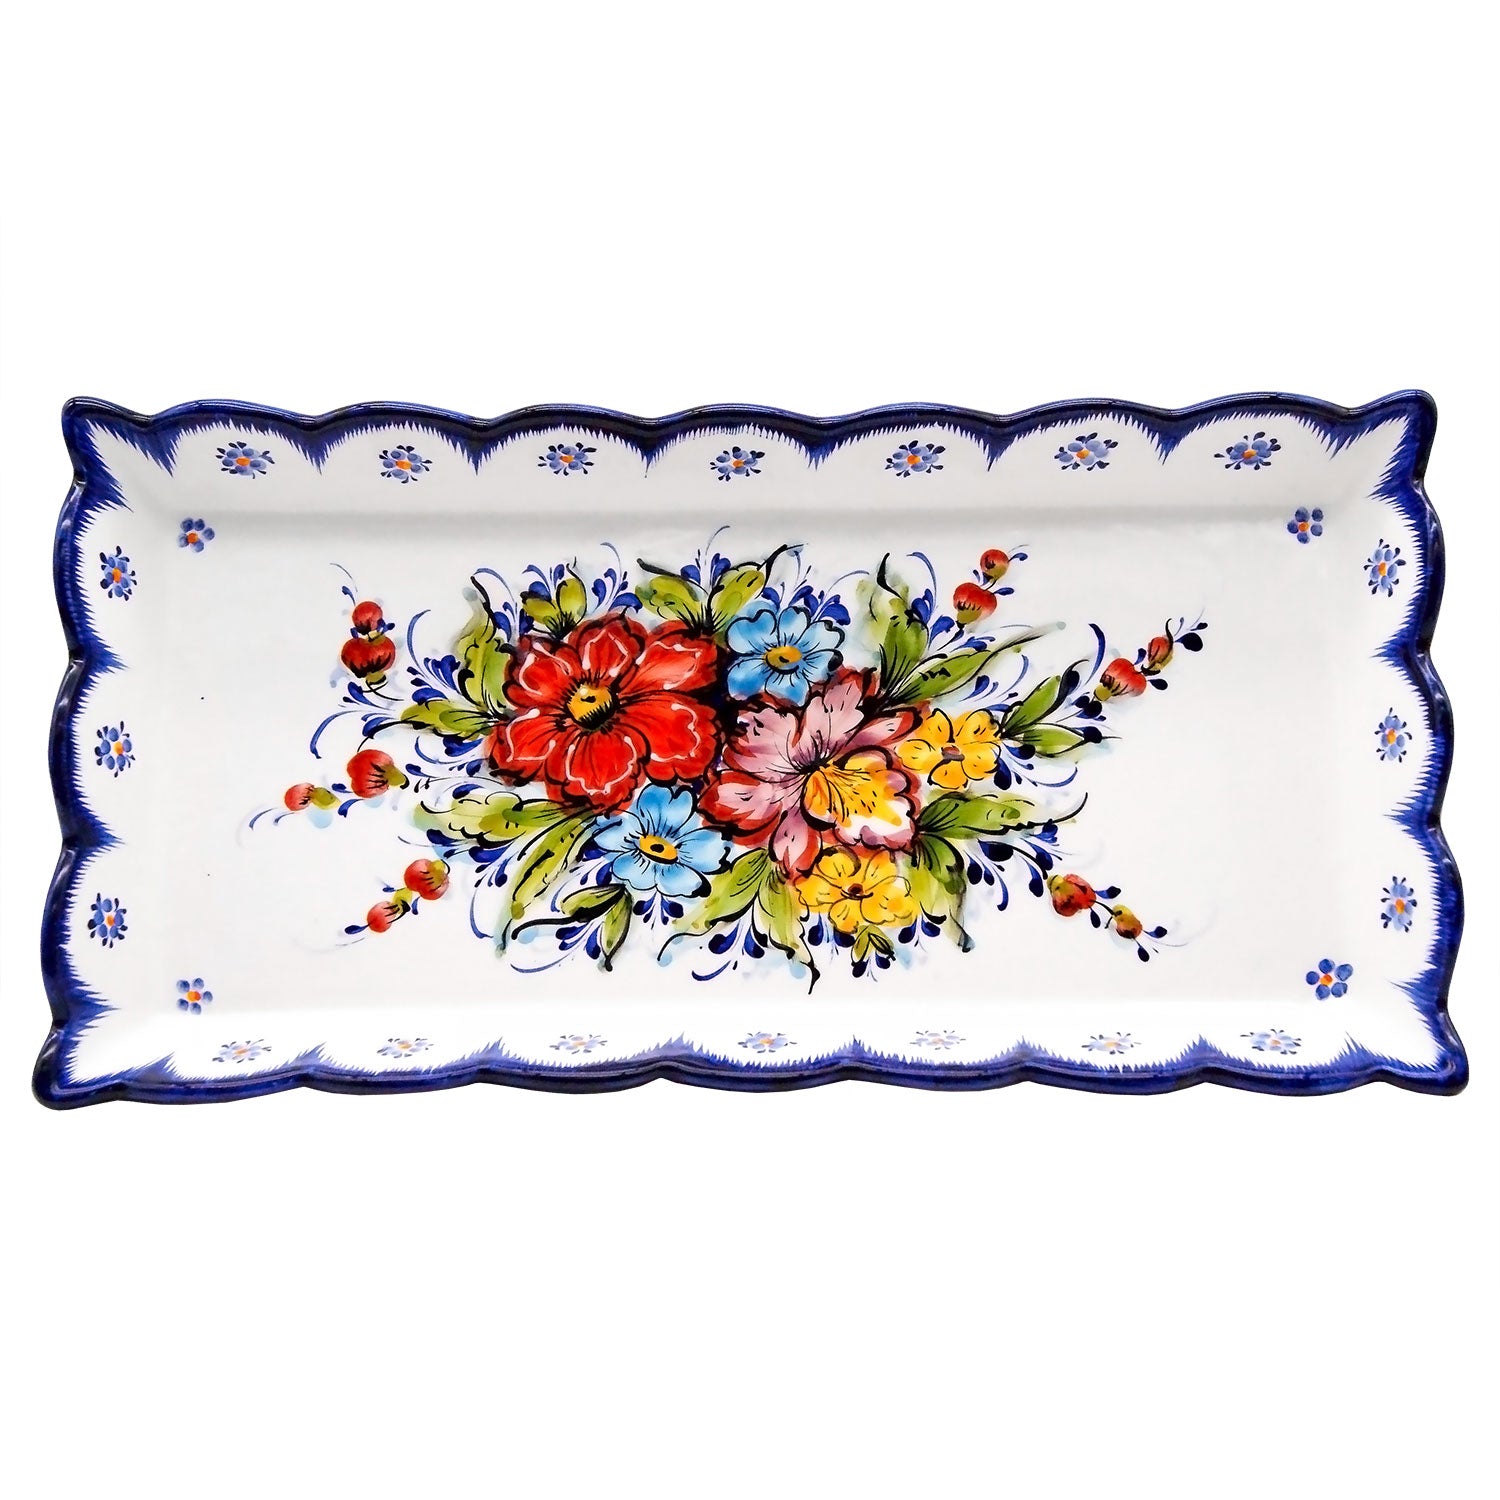 Hand Painted Alcobaça Ceramic Rectangular Serving Platter Dish Tray 